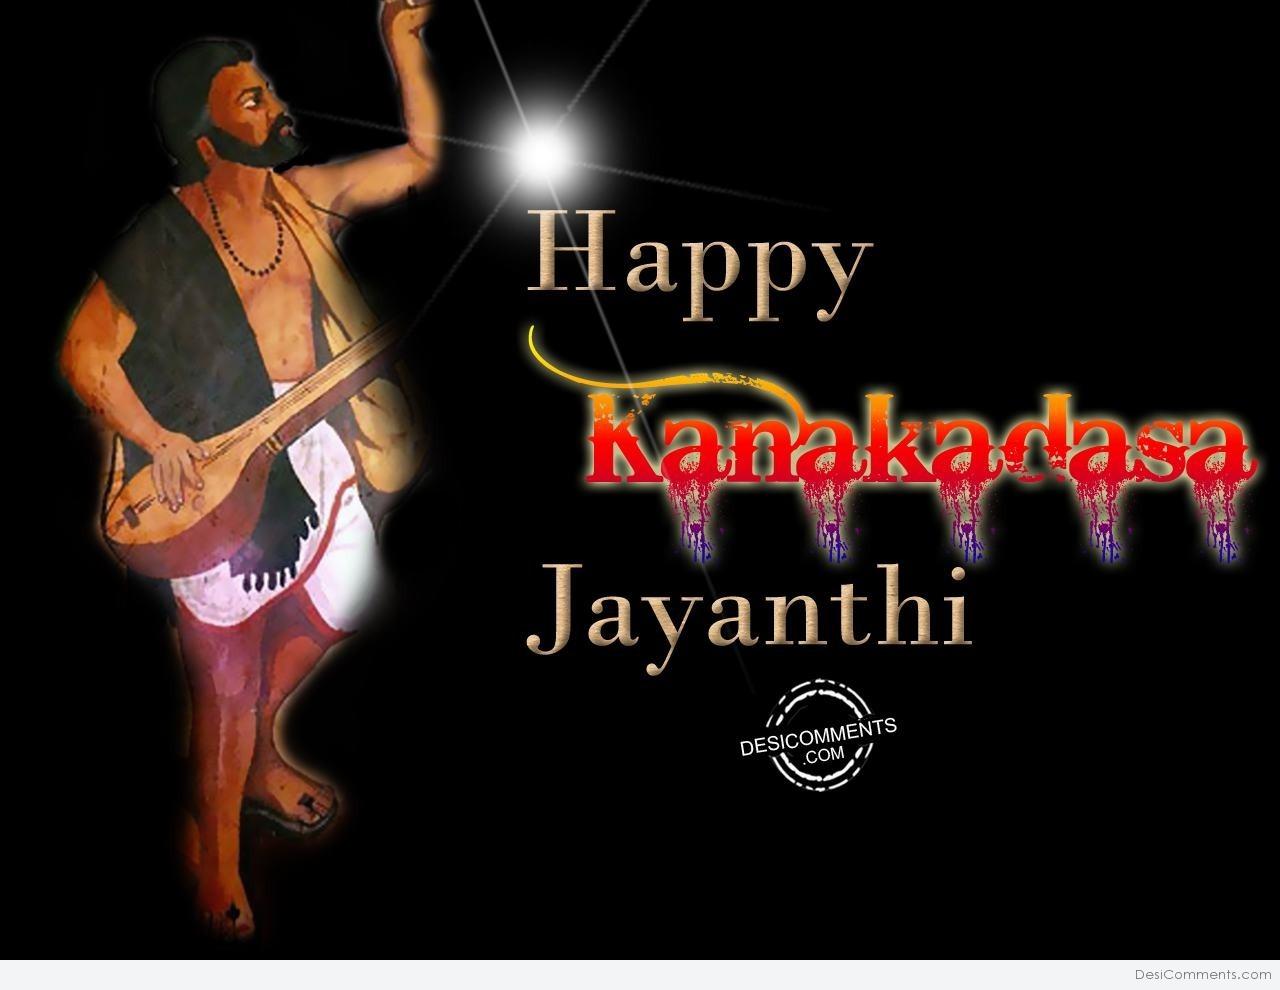 Kanakadasa Jayanthi Picture, Image, Photo